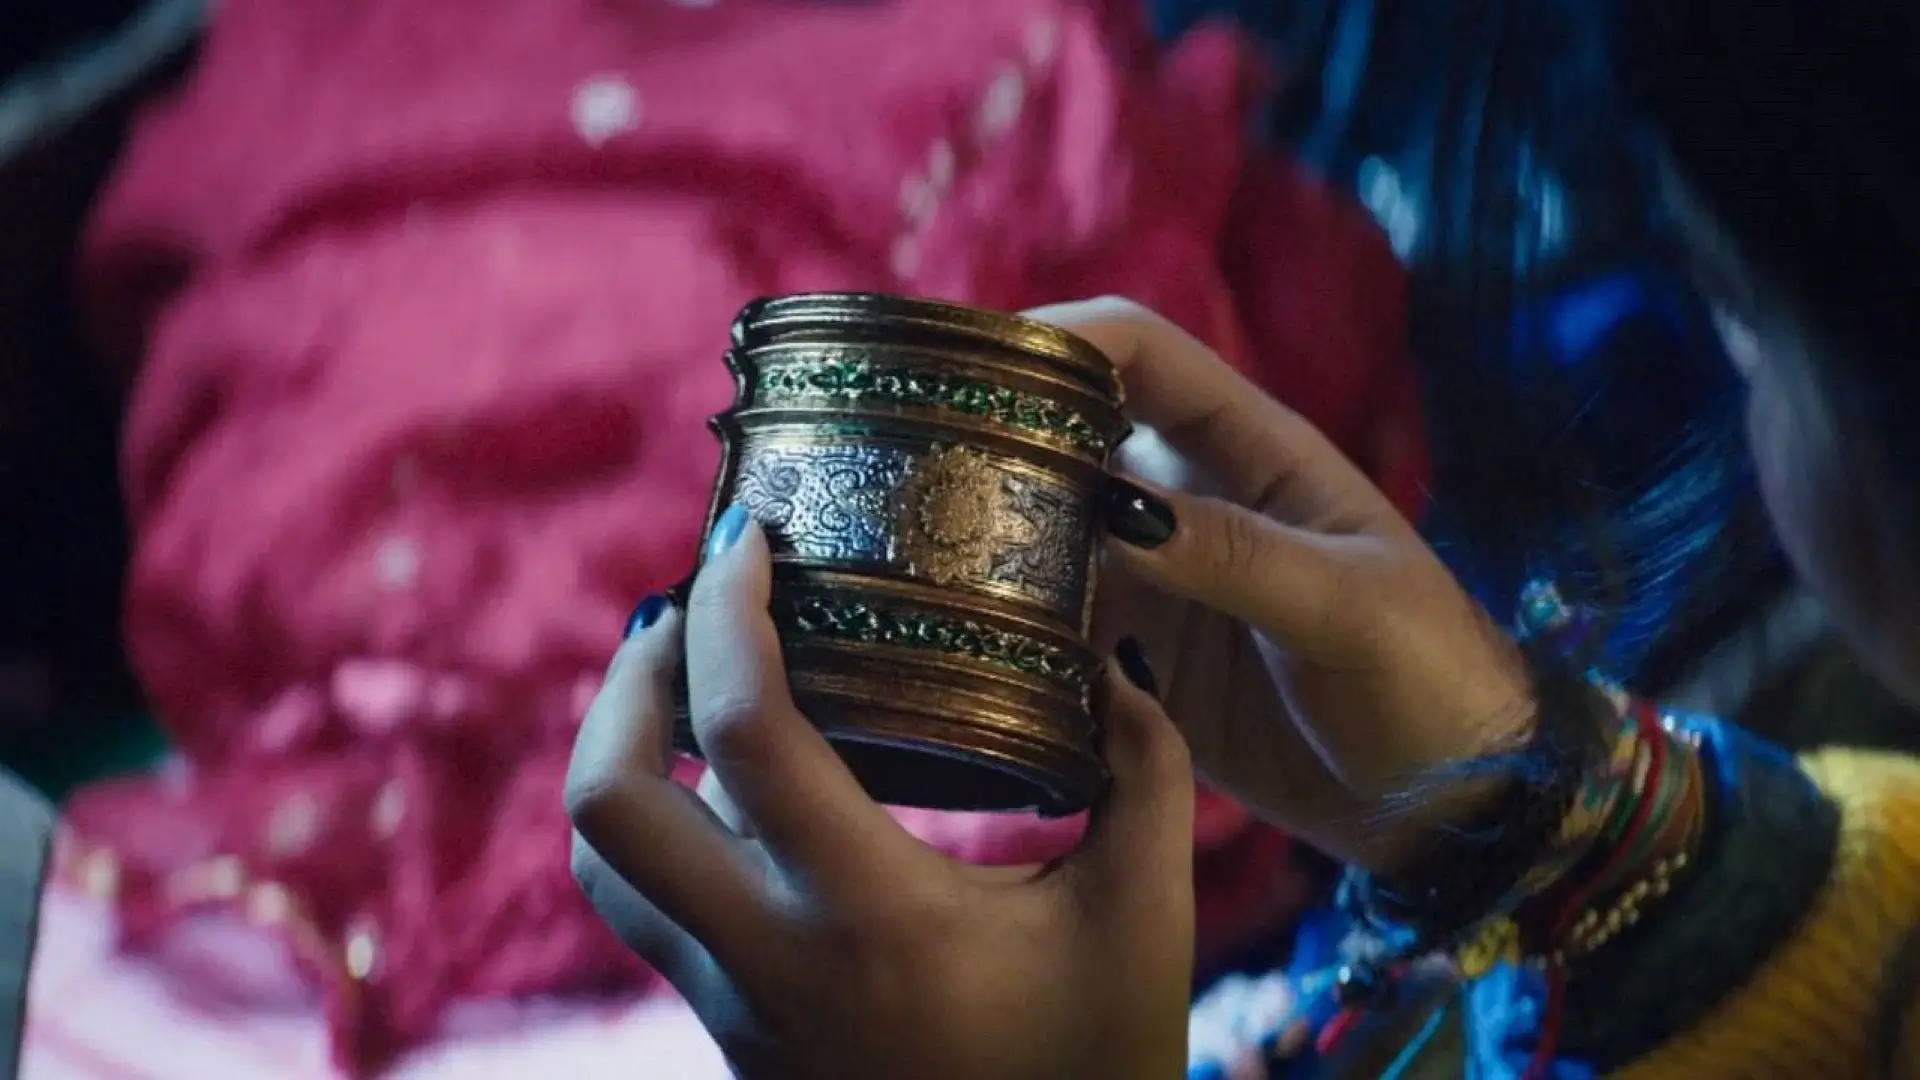 Kamala Khan's bracelet powers connection to The Eternals